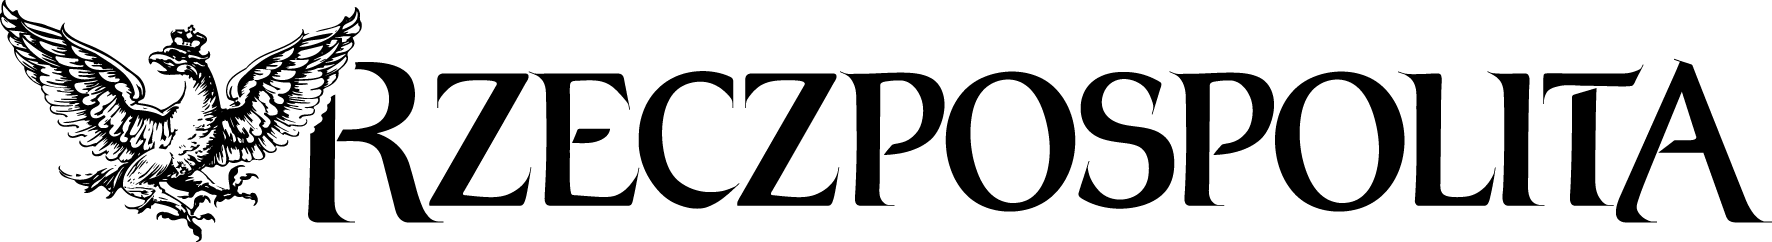 Logo dziennika Rzeczpospolita